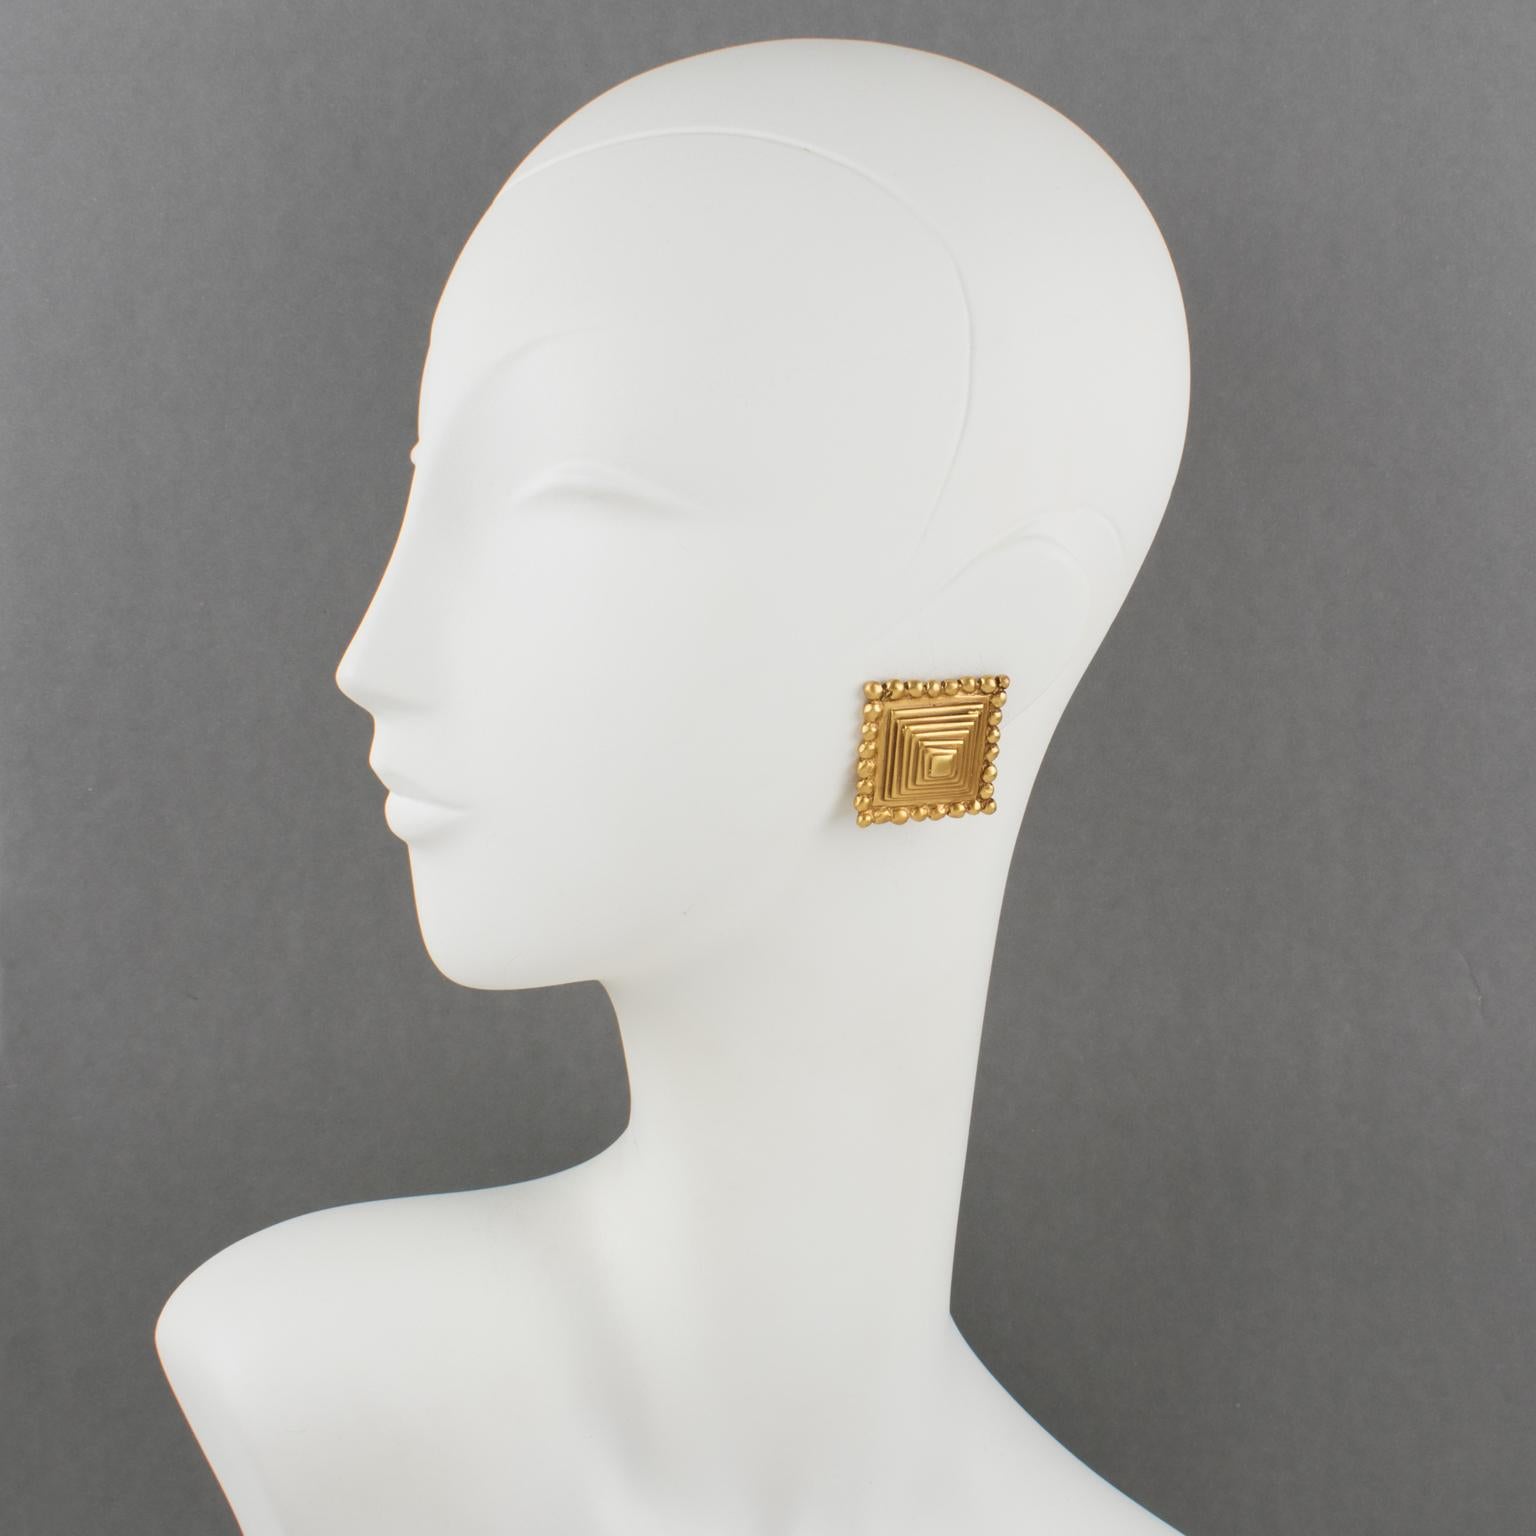 Elegant Valentino Garavani gilt metal clip-on earrings. Dimensional pyramidal shape with brushed gilt metal. Valentino hallmark underside.
Measurements: 1.25 in. wide (3.1 cm) x 1.25 in. high (3.1 cm)